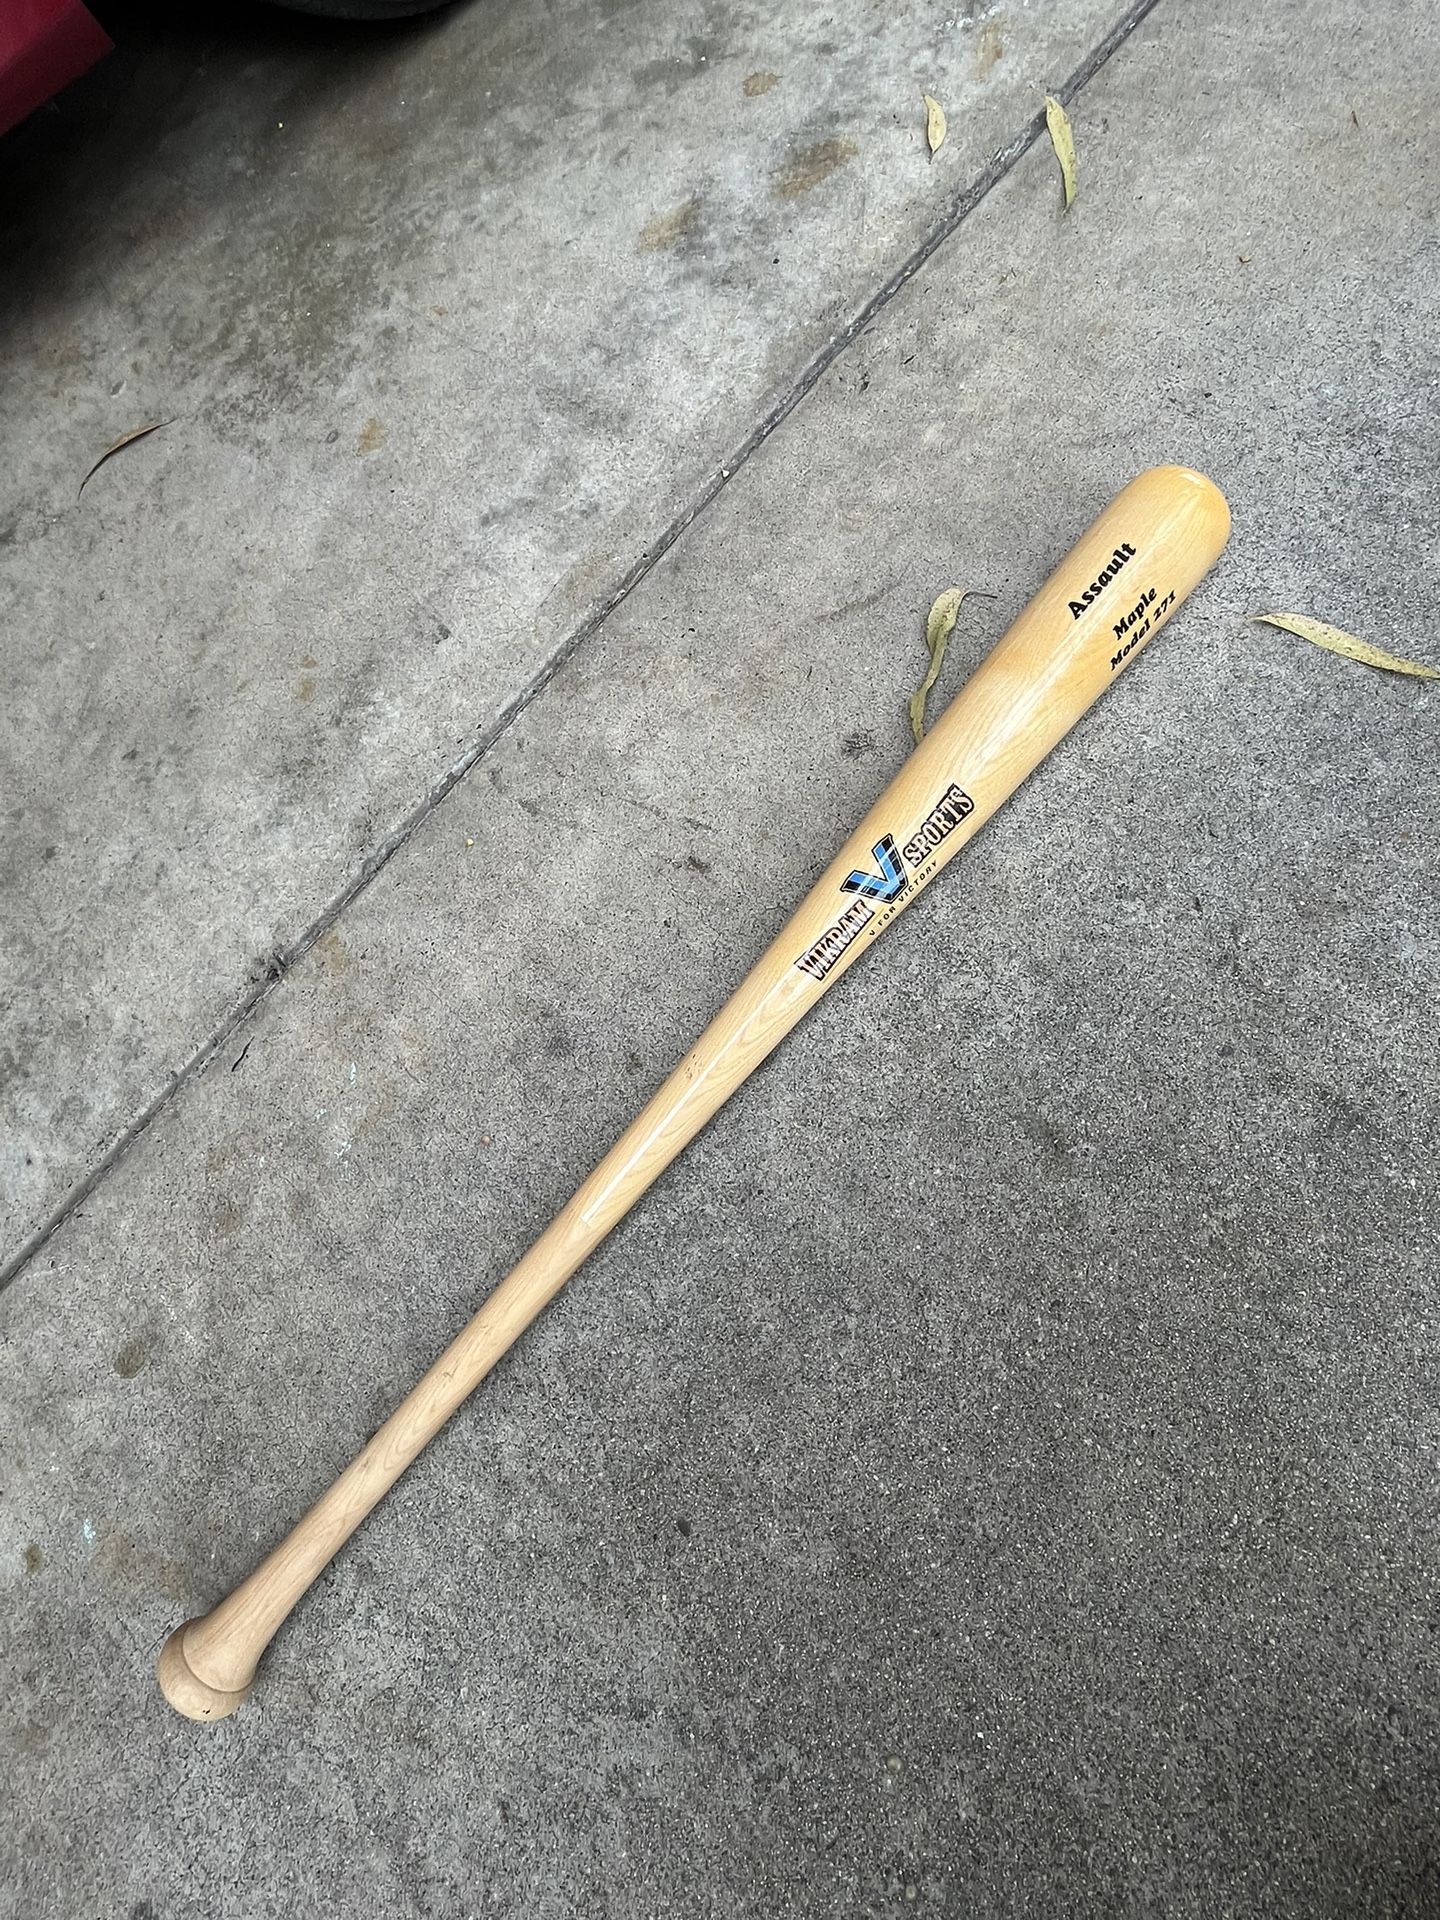 32” Vikram Sports Wood Baseball Bat Assault Maple Model 271